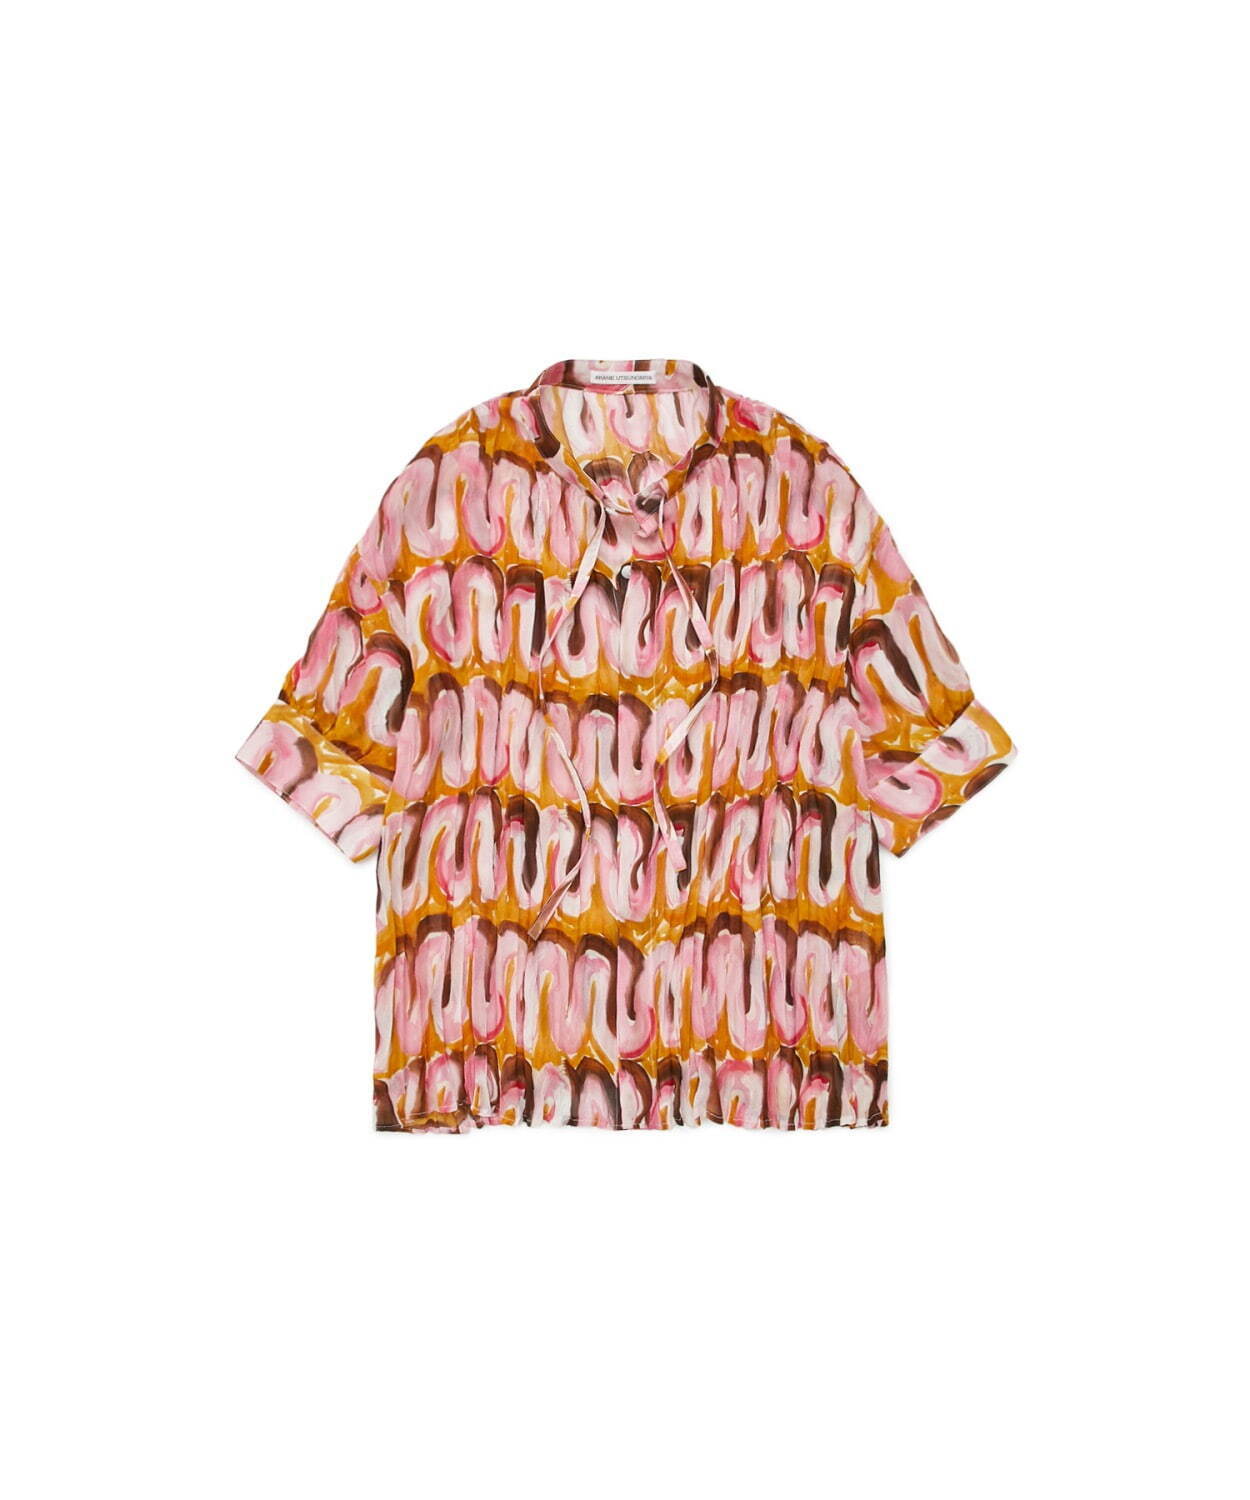 pleated blouse 35,200円